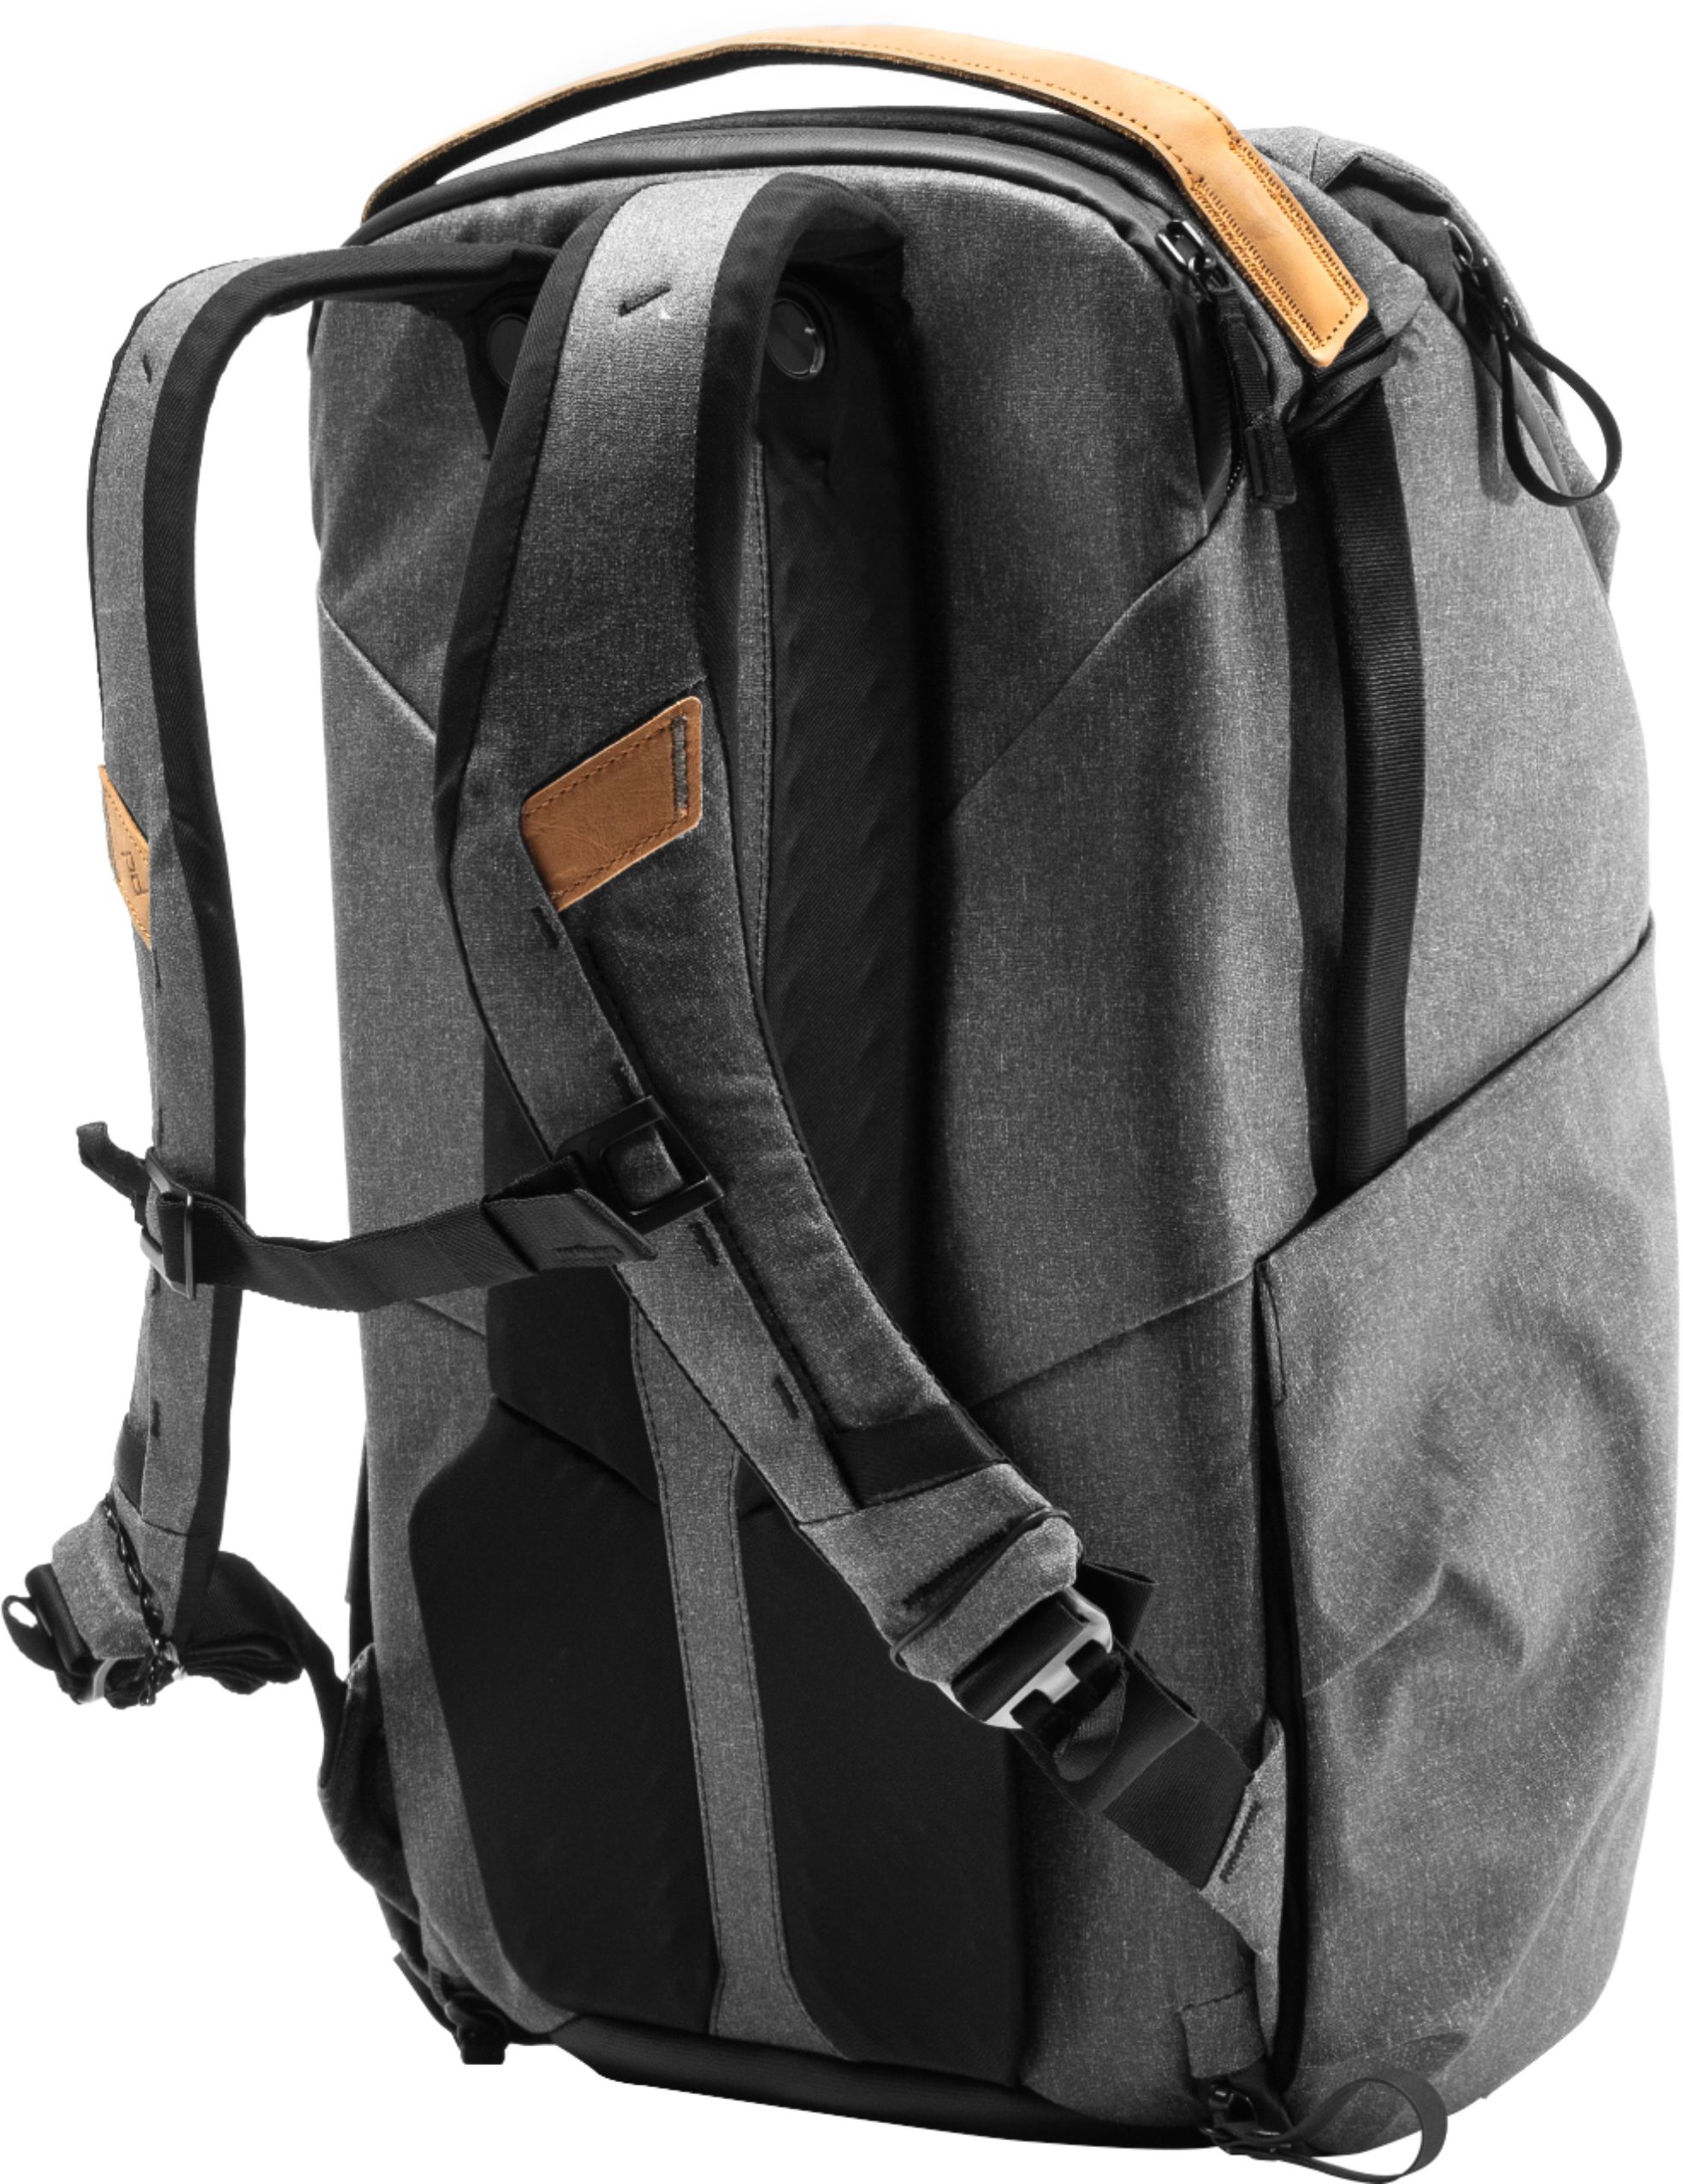 Peak Design Everyday Backpack V2 30L: A Long-Term Review - Light And Matter